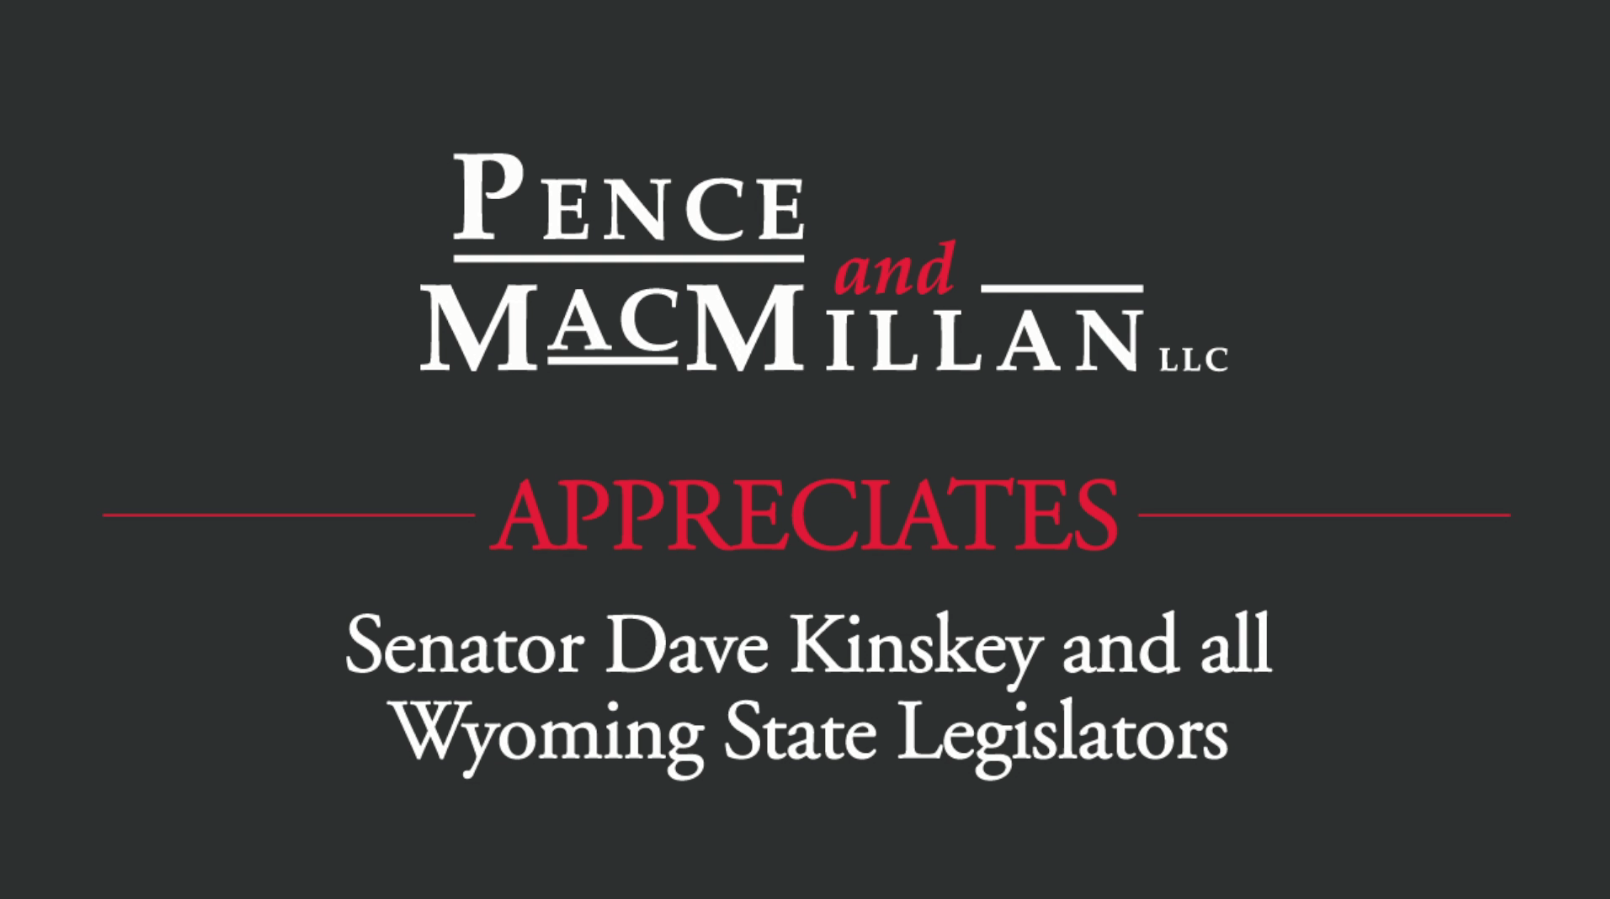 Pence and MacMillan appreciates Senator Dave Kinskey and all Wyoming state legislators.